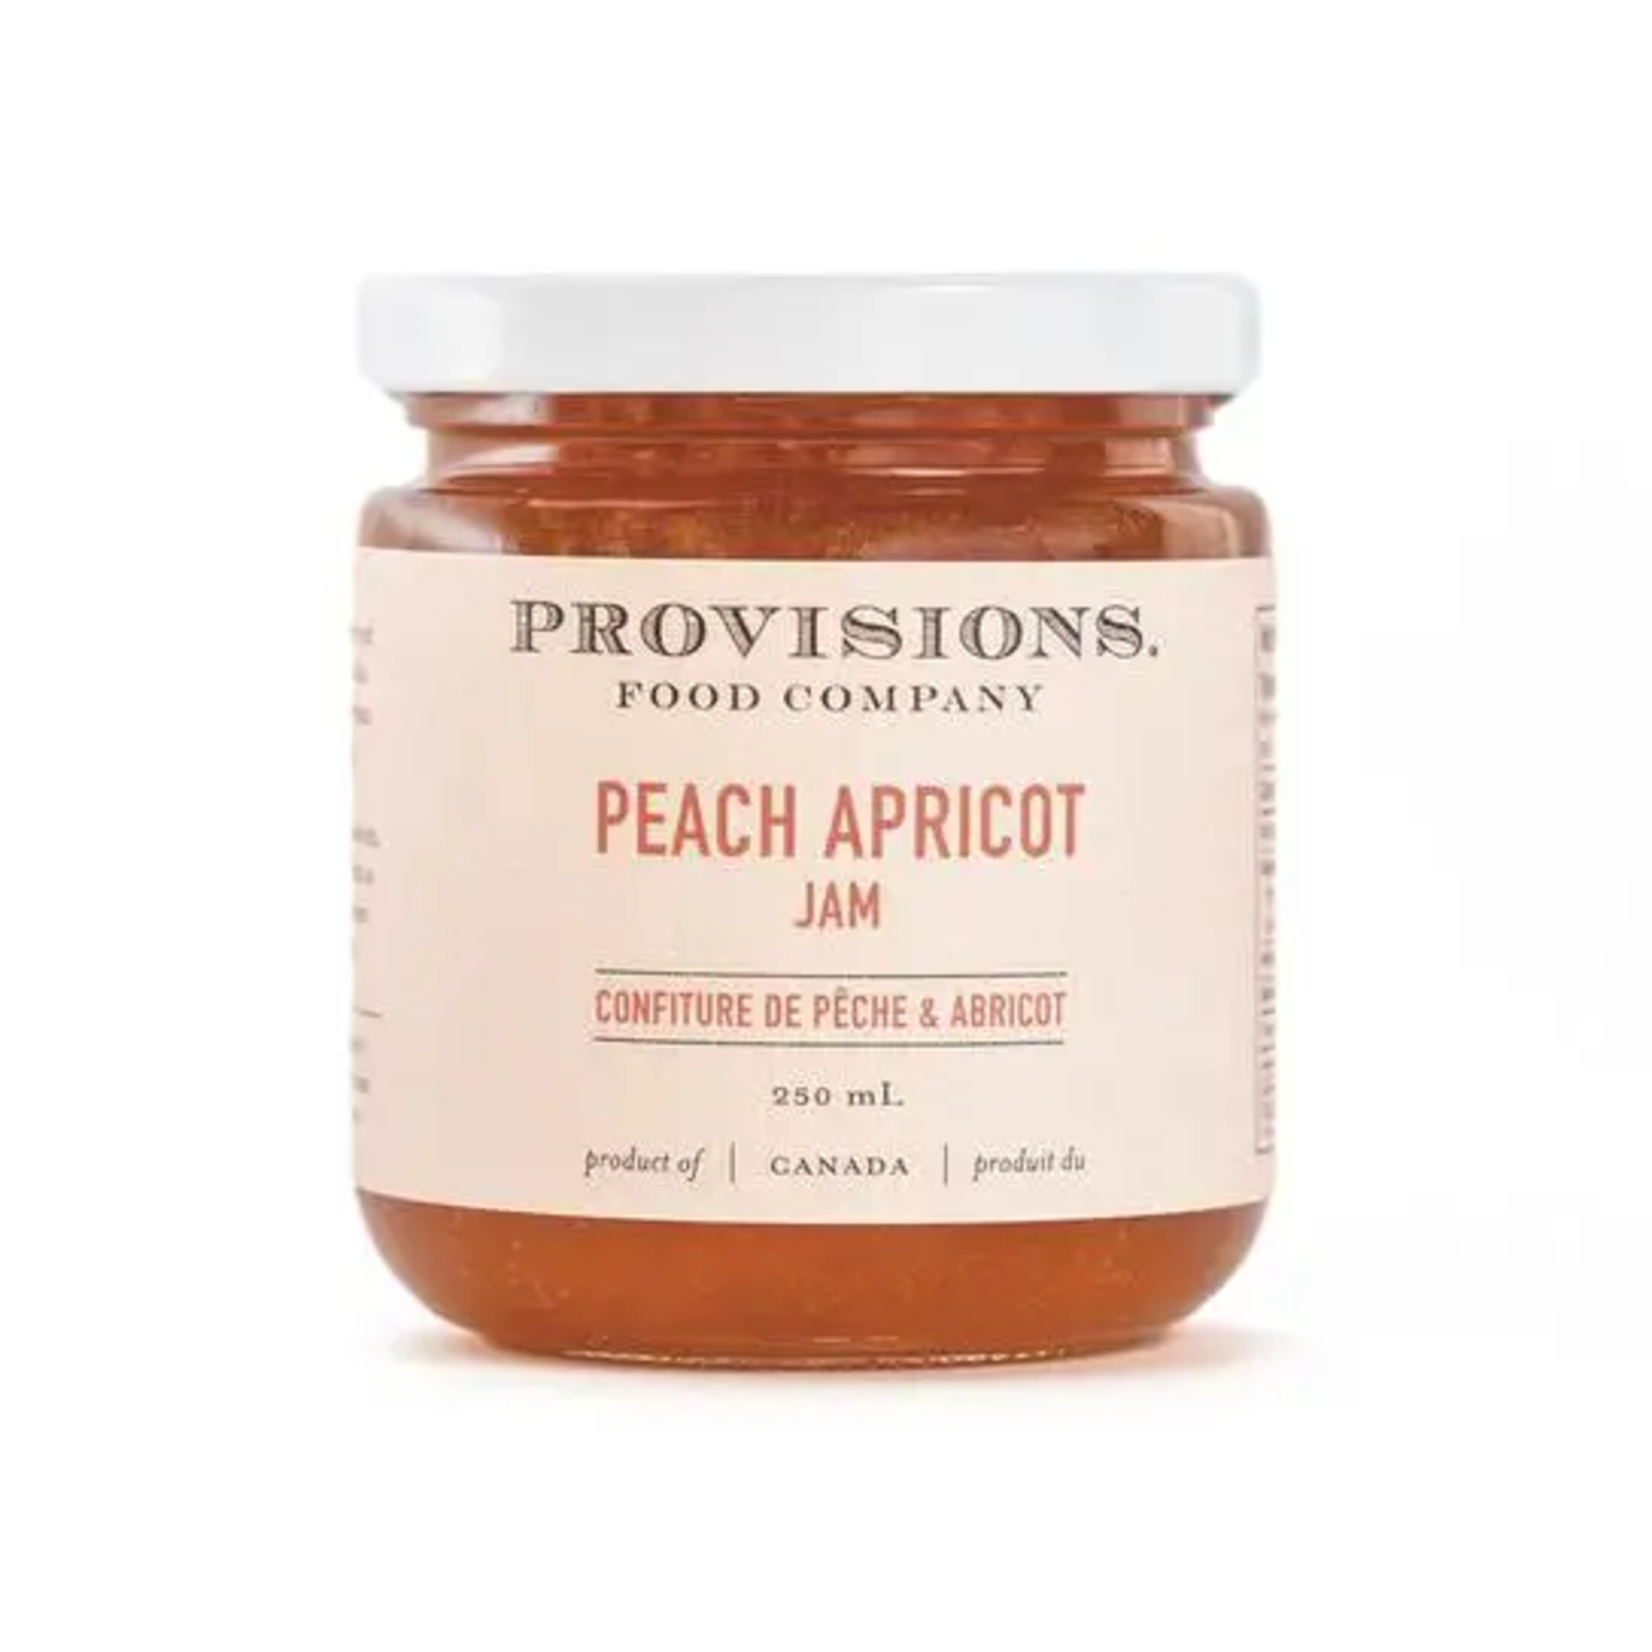 Provisions Food Company Peach Apricot Jam - 250ml